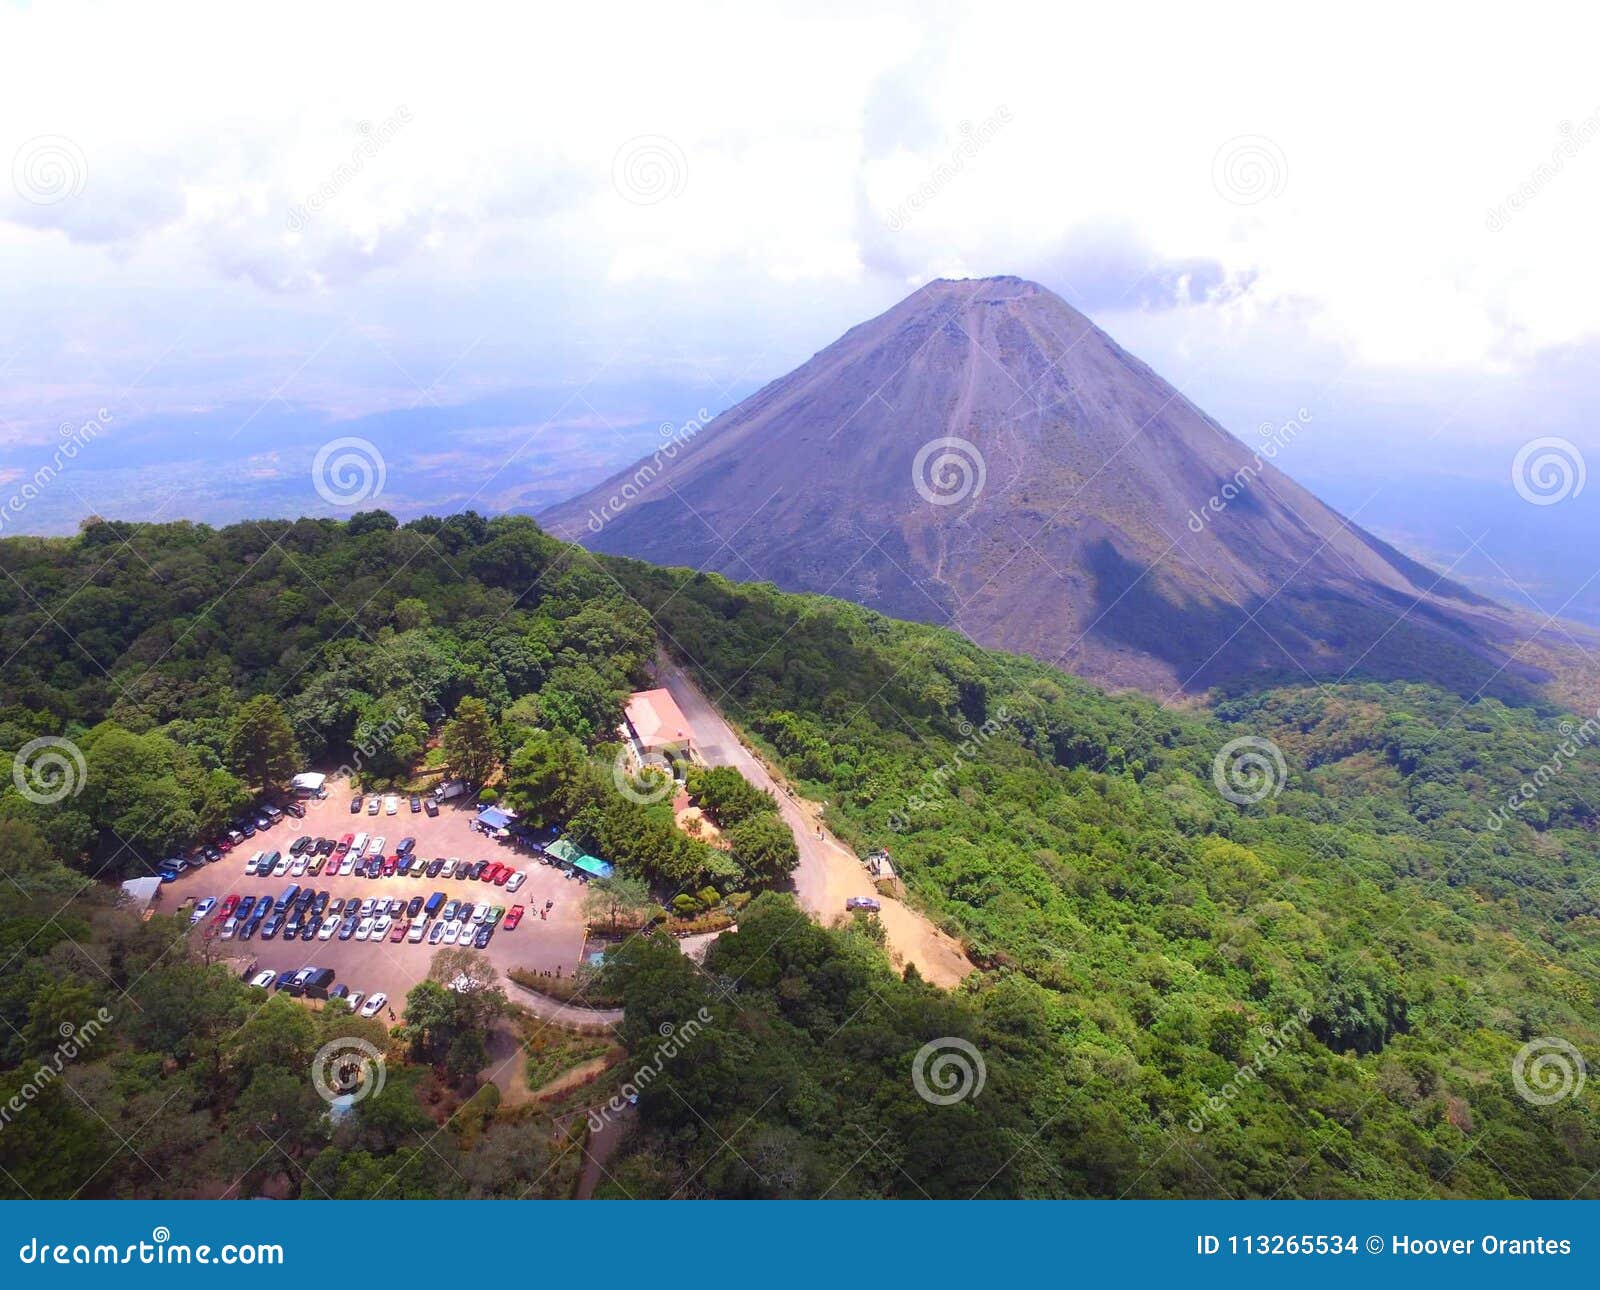 cerro verde- izalco volcano